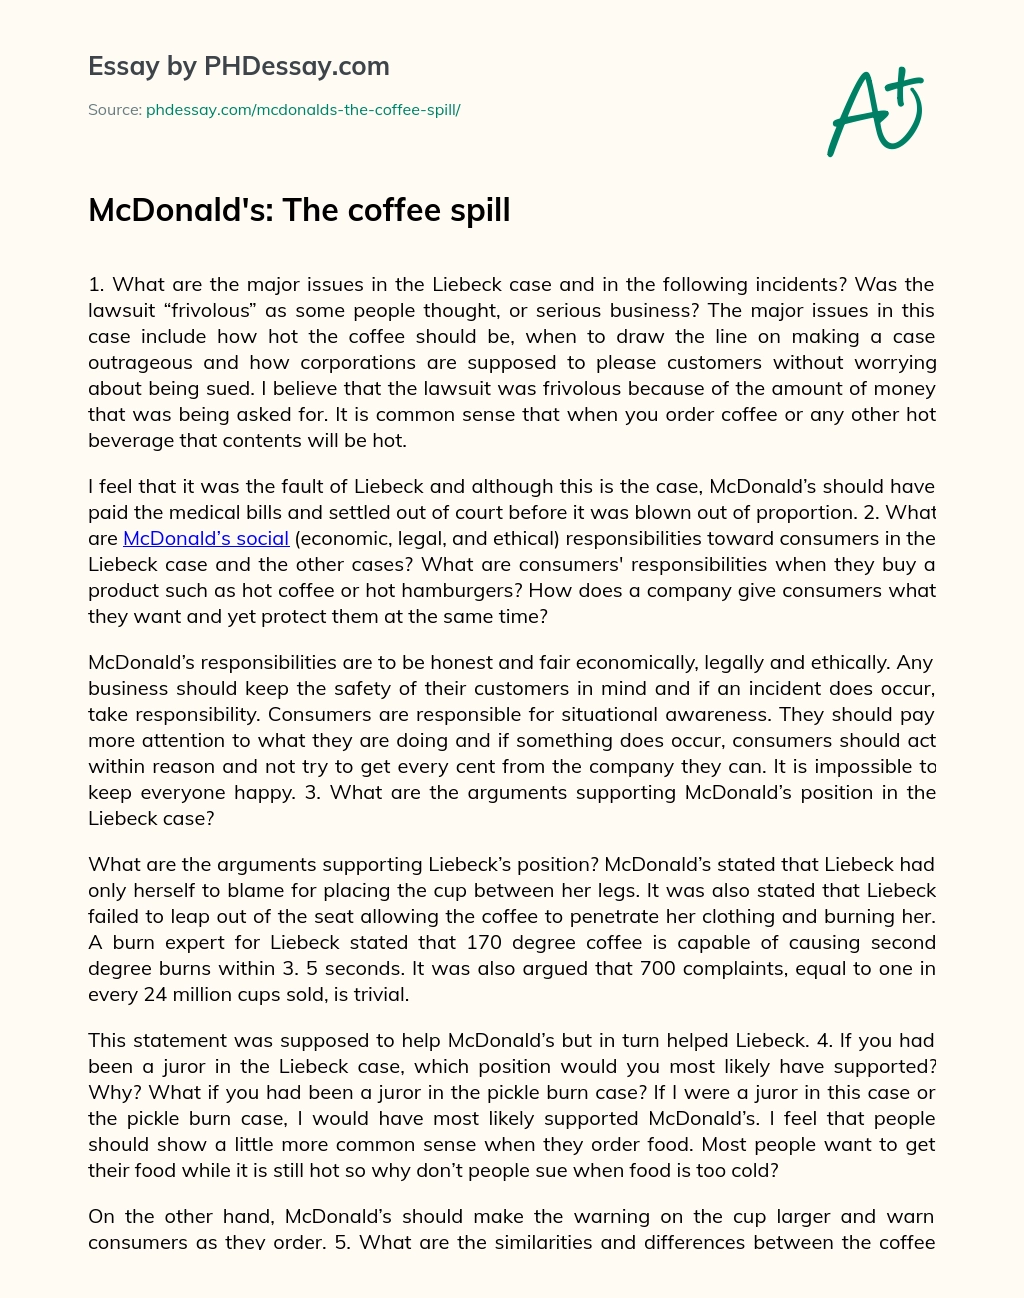 McDonald’s: The coffee spill essay